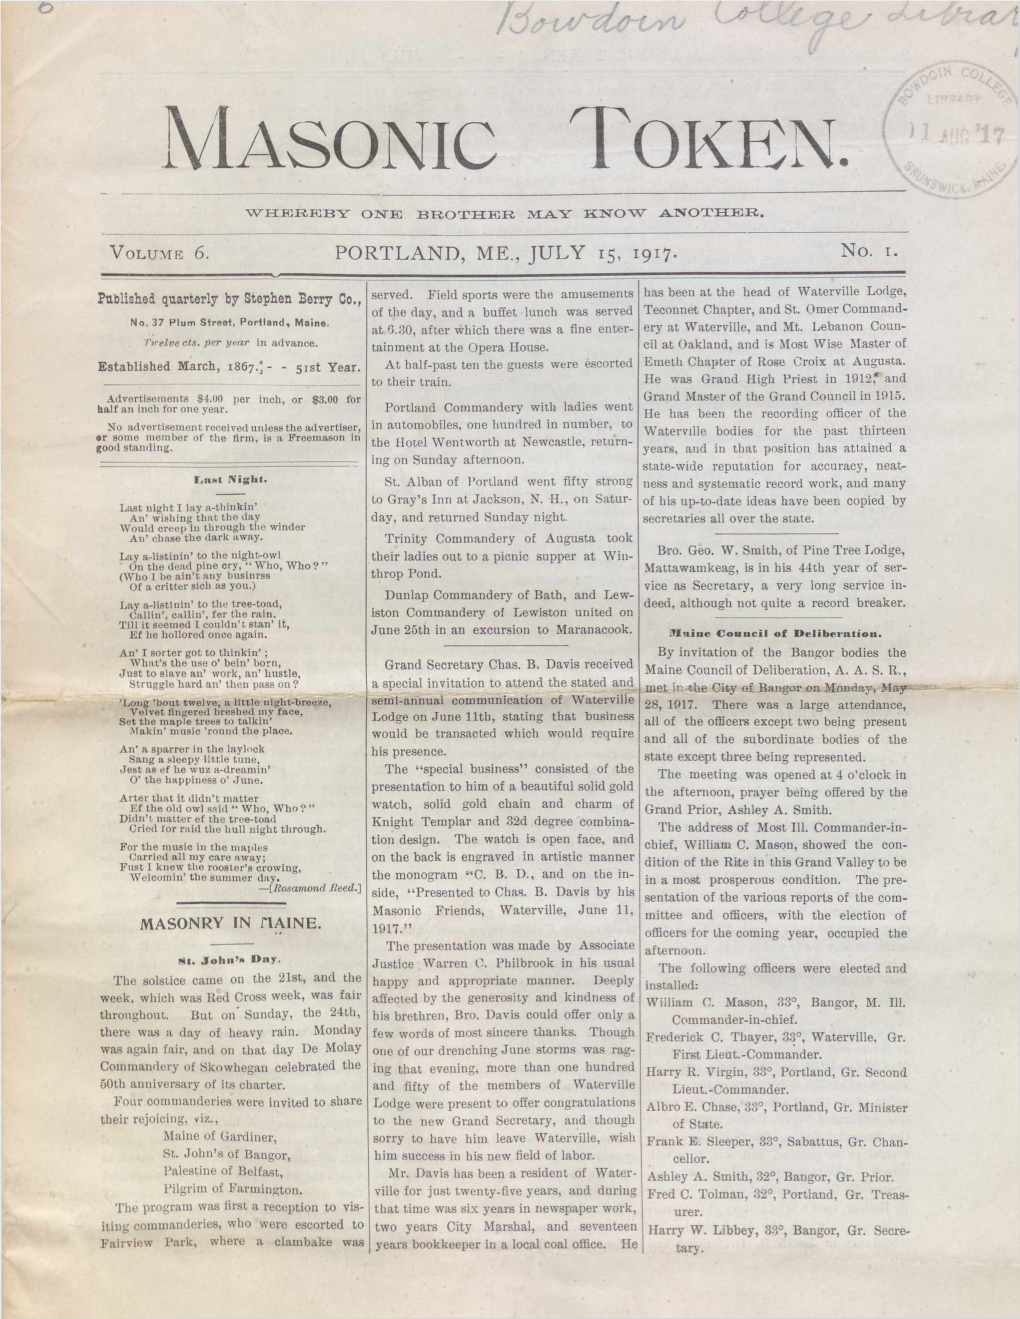 Masonic Token: July 15, 1917